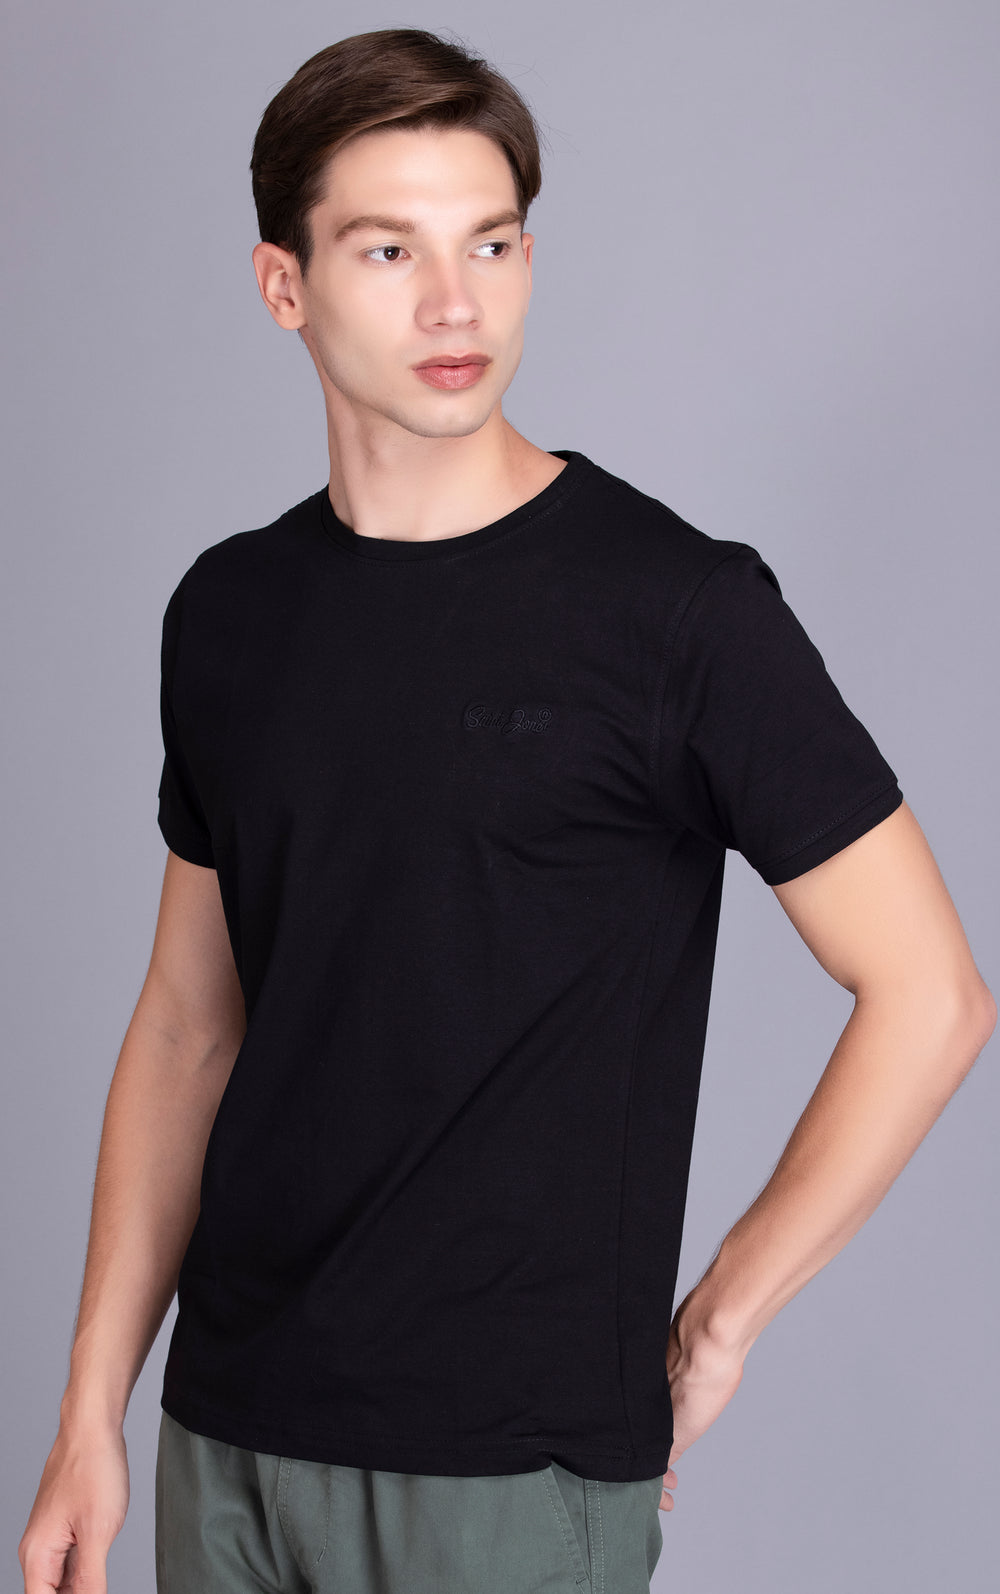 BUY Organic cotton Half sleeves T-shirt Black ONLINE